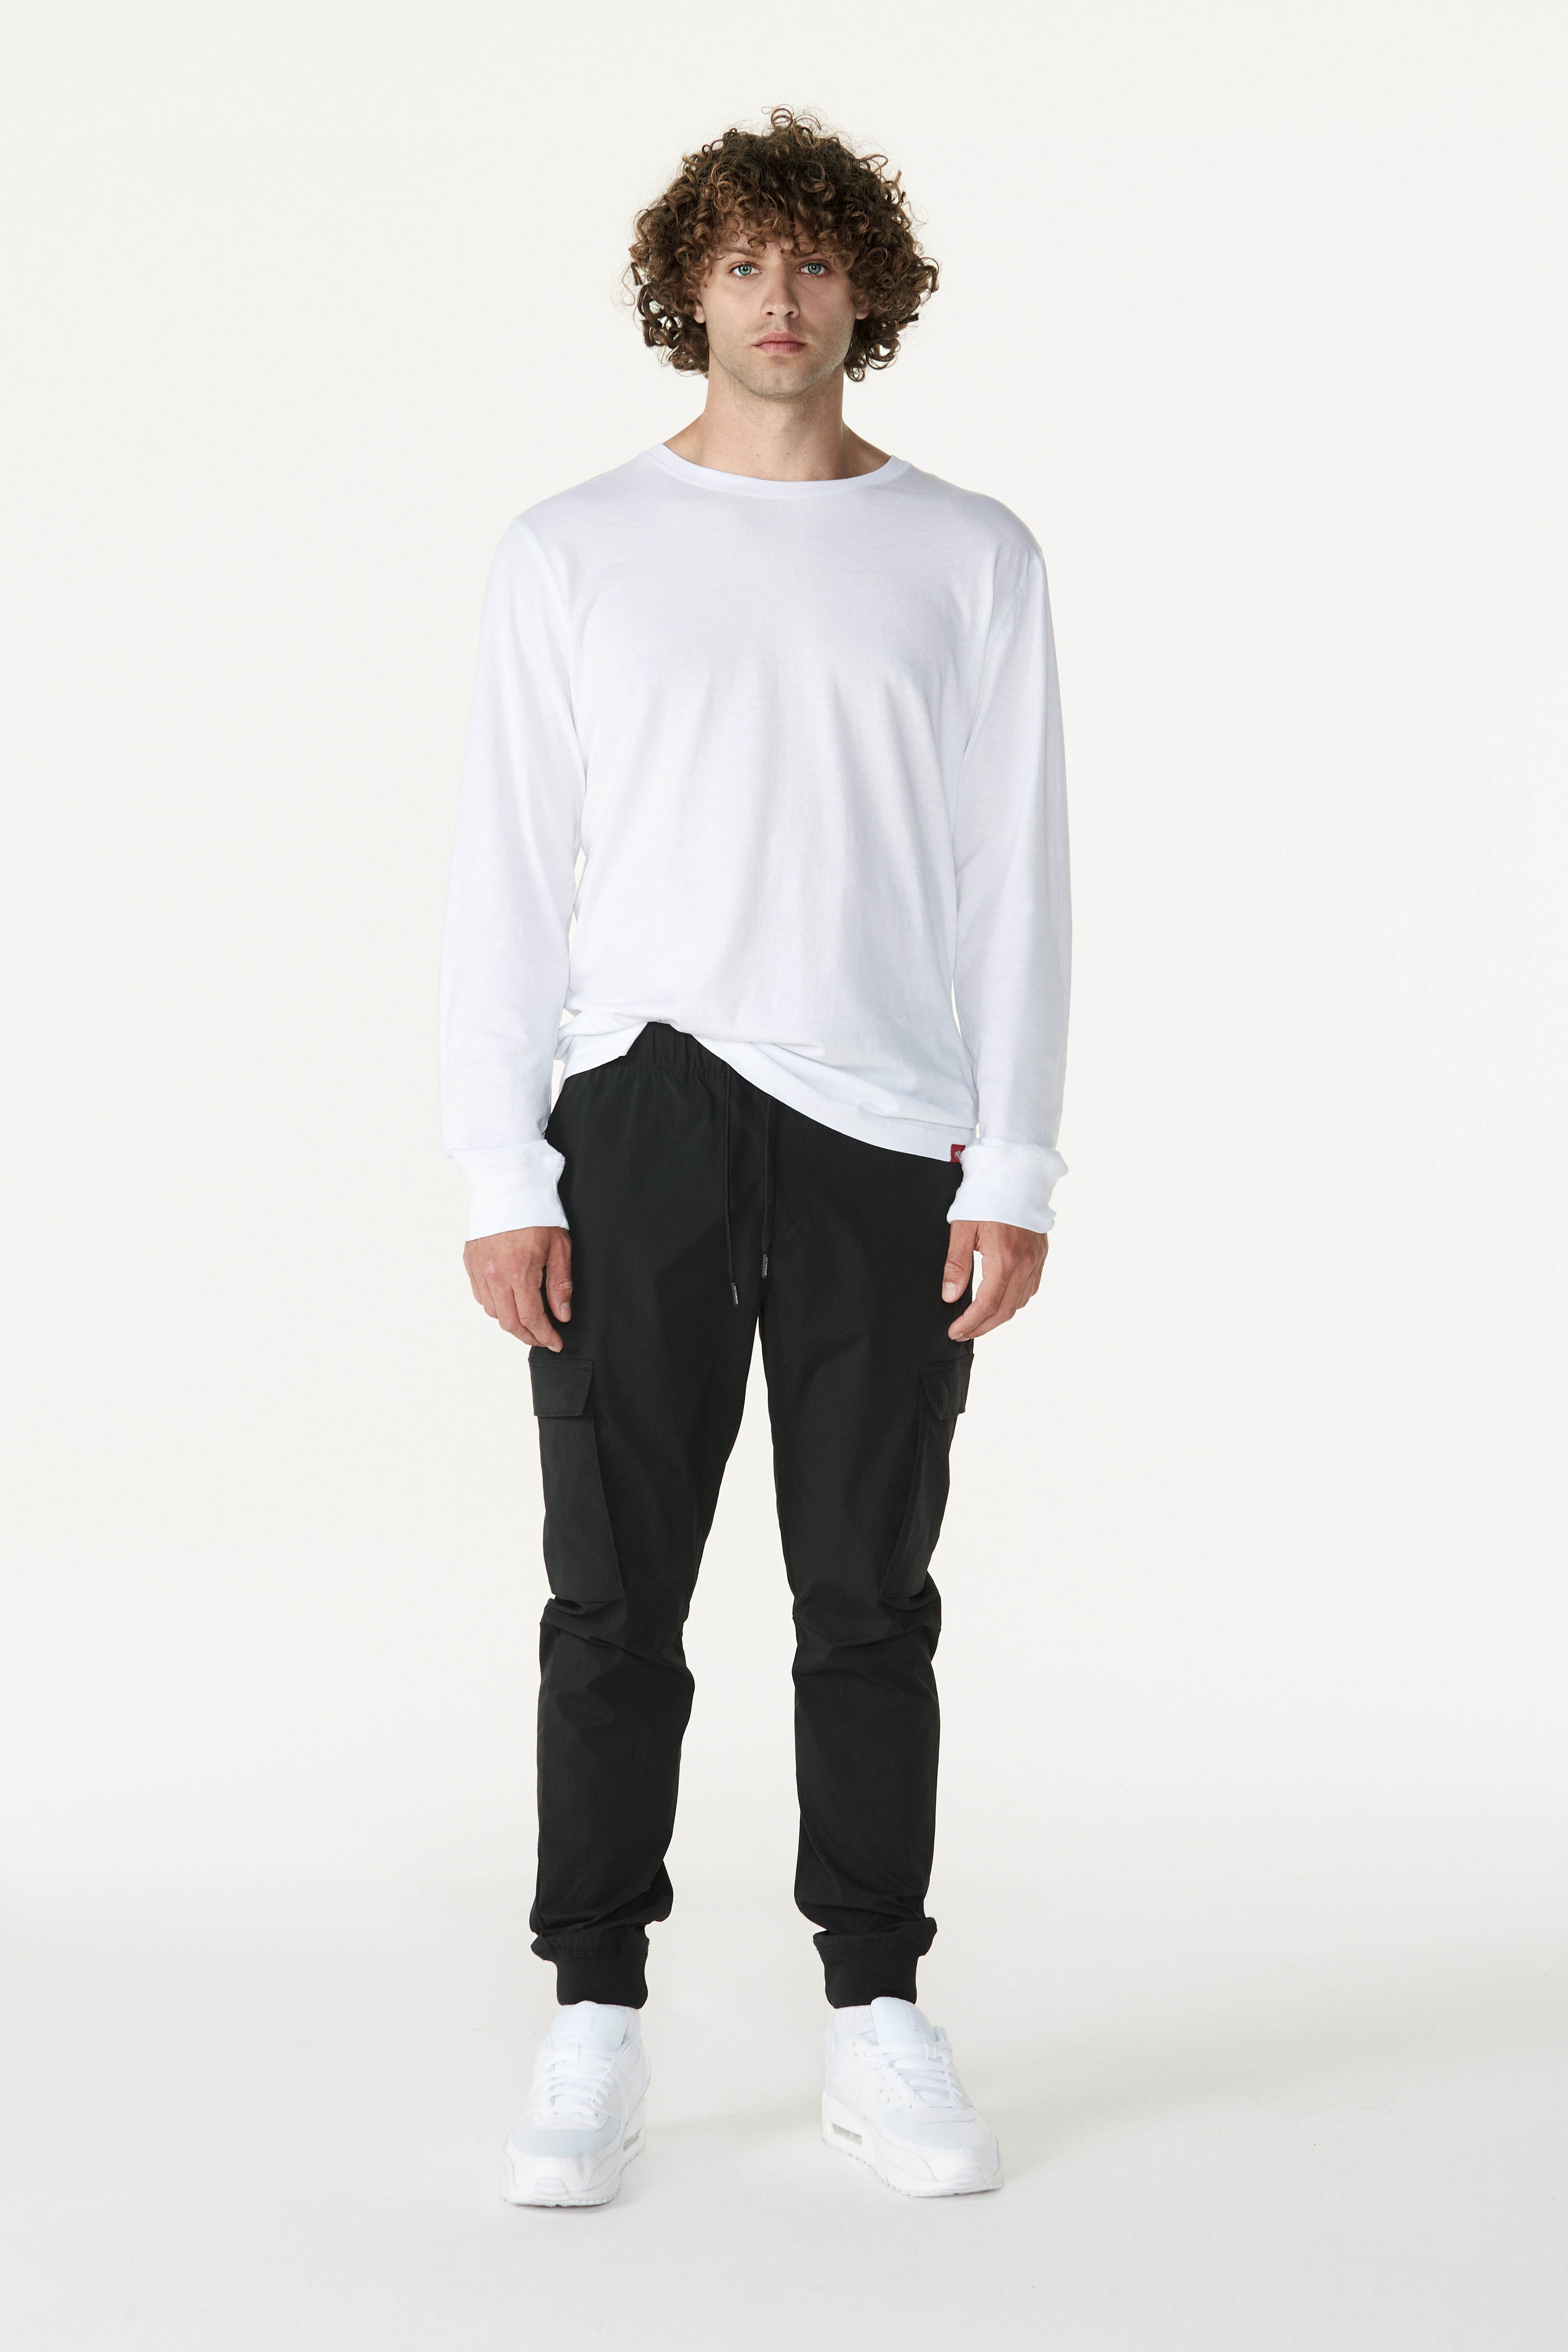 QIPOPIQ Clearance Shirts for Men Crew Neck Long Sleeve 3D Prints T-shirt  Loose Pullover Top Tee Shirts Black L 